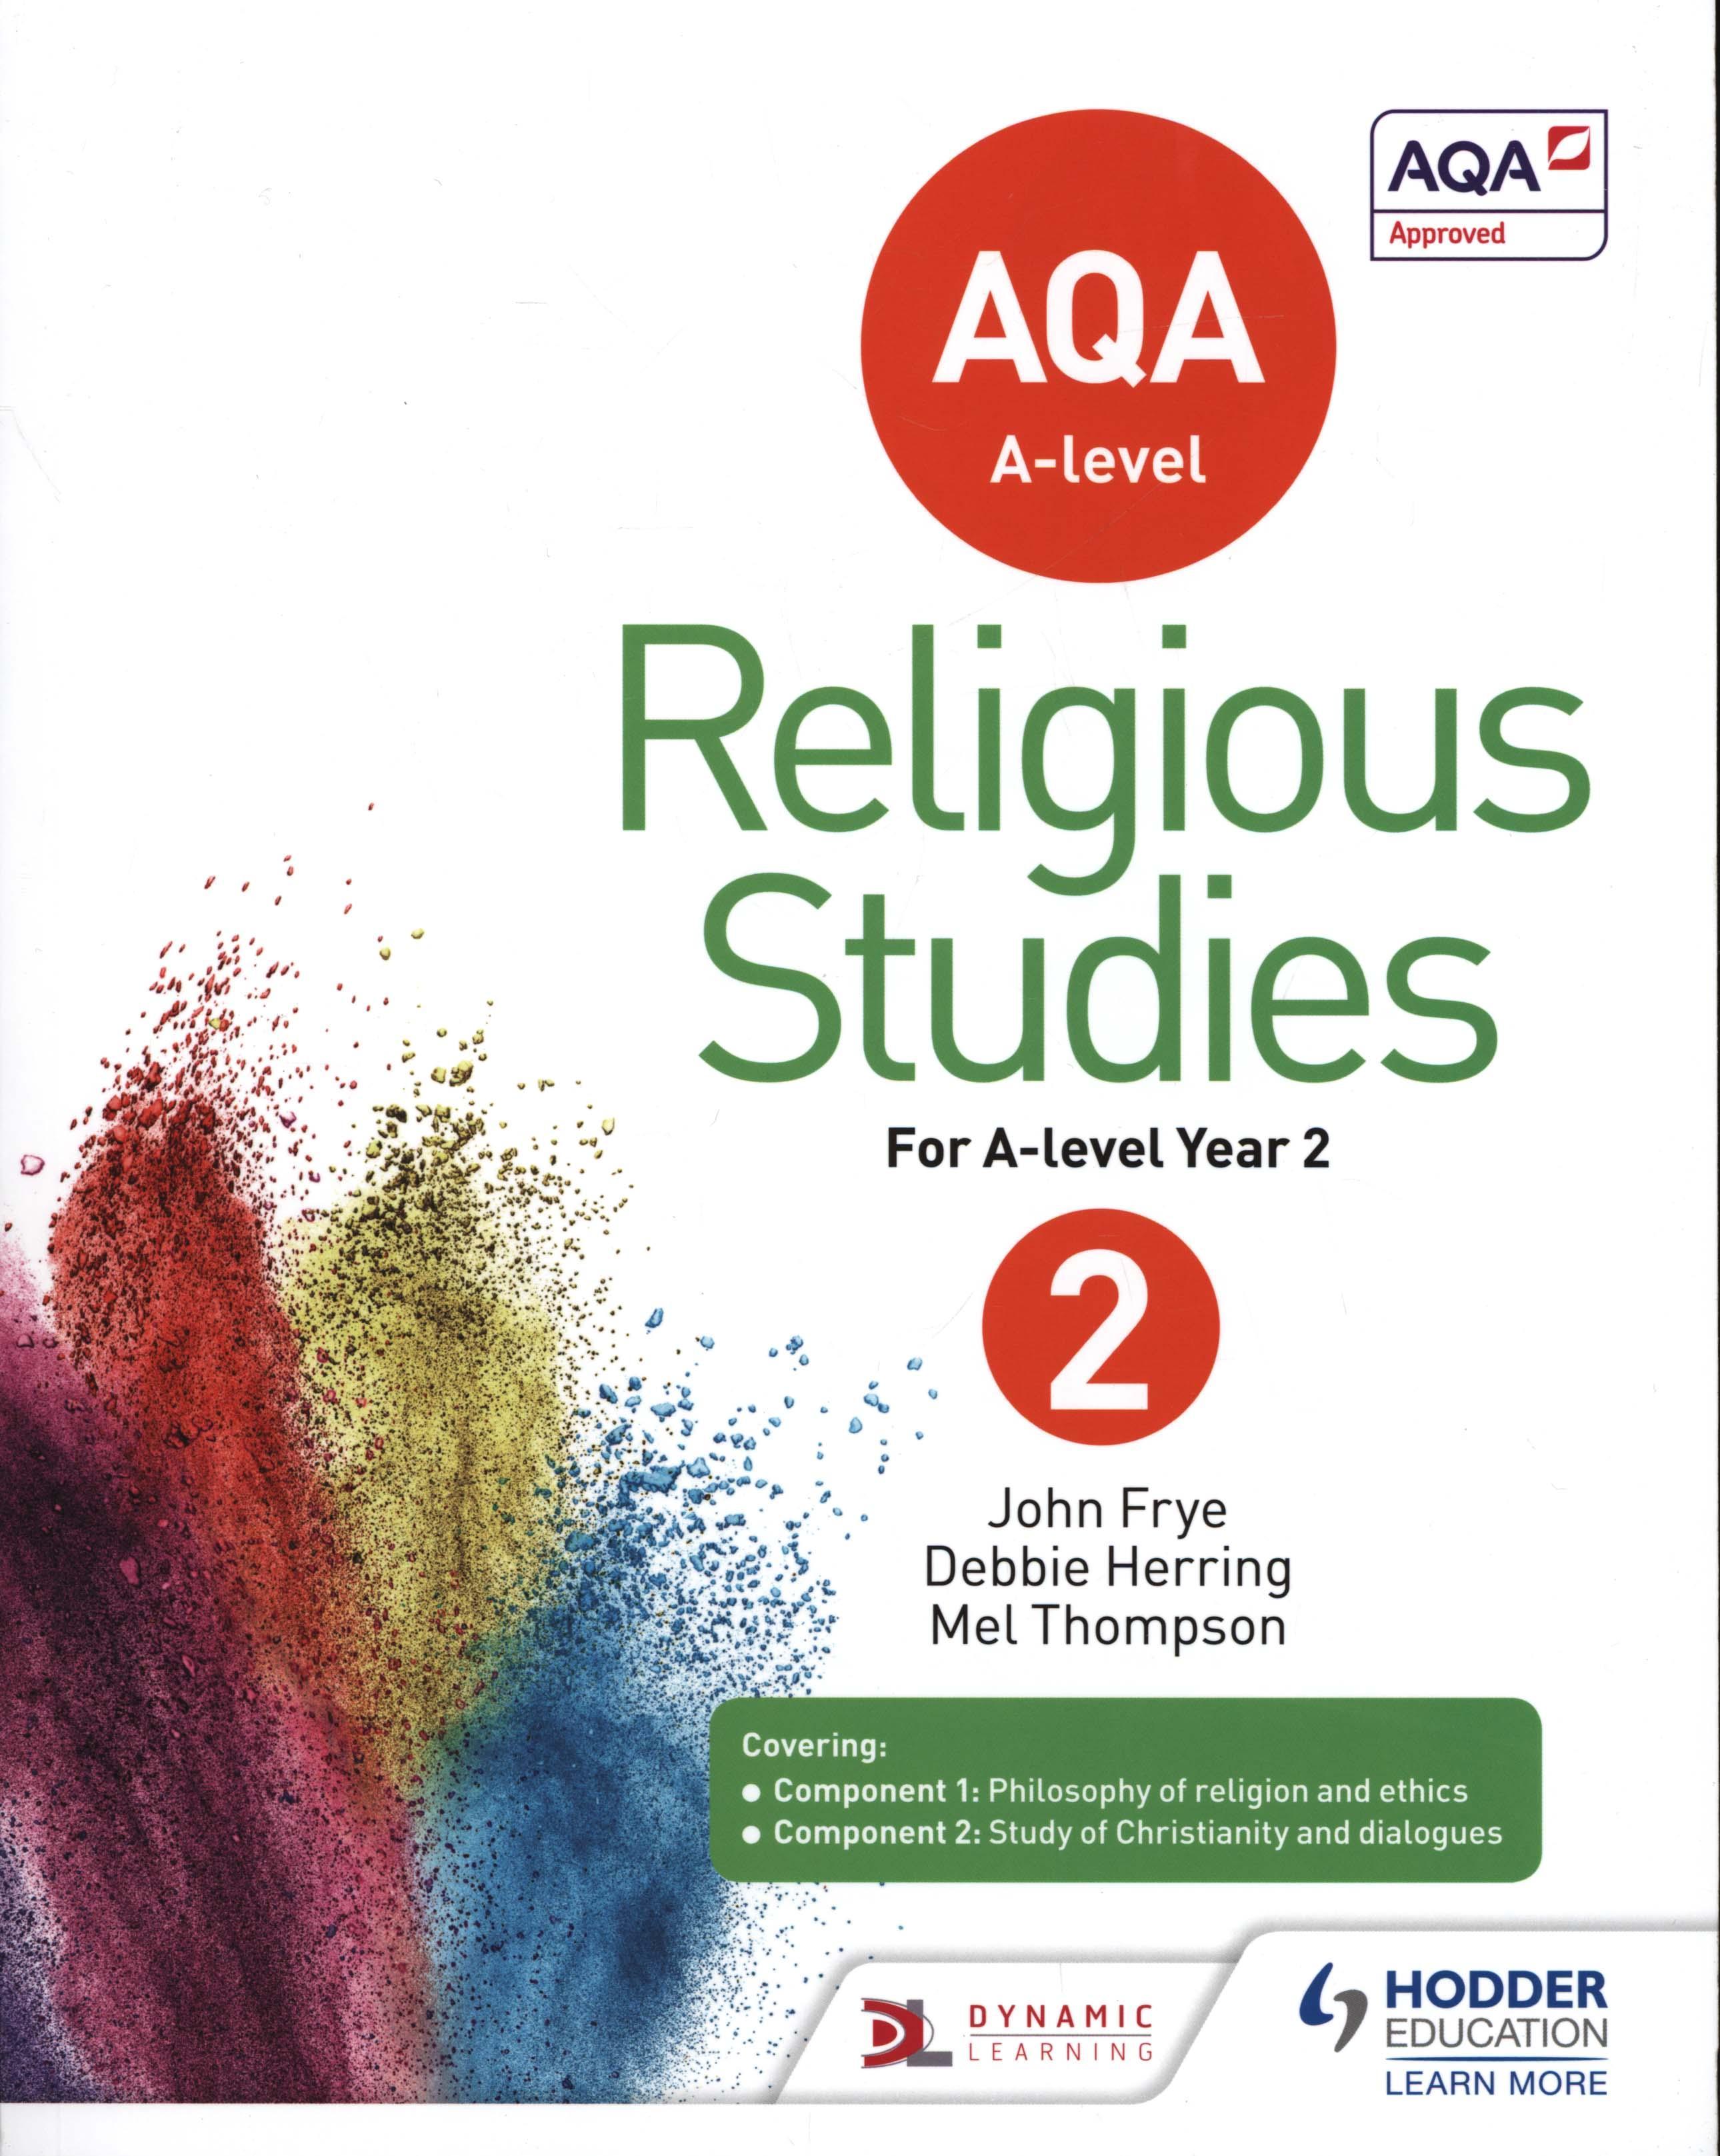 AQA A-level Religious Studies Year 2 -  